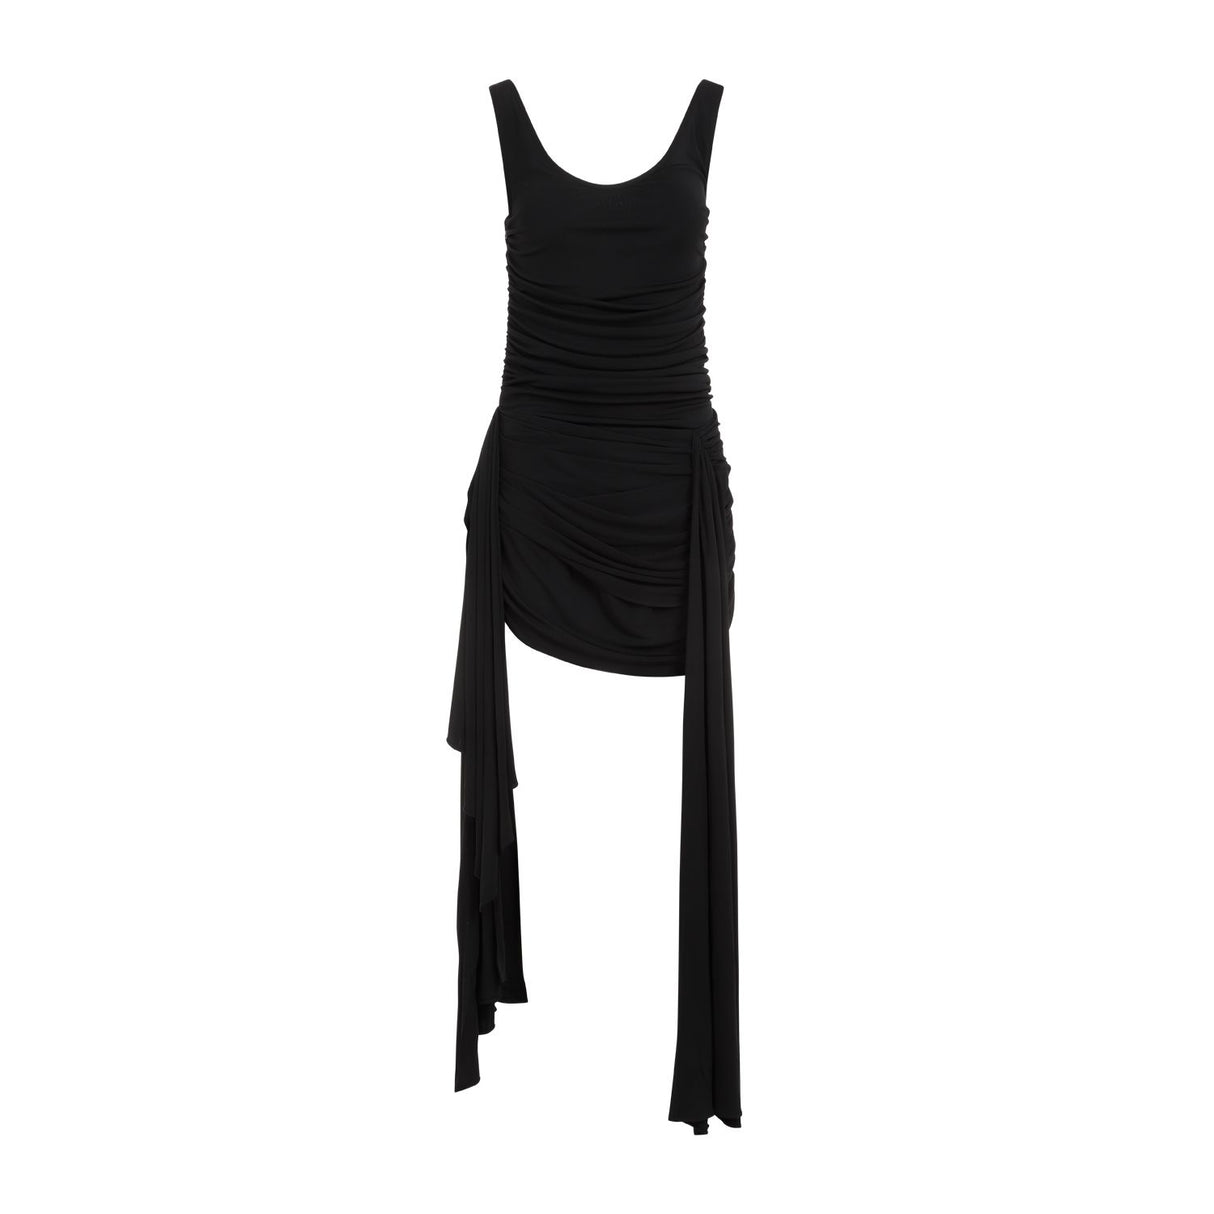 فستان أسود قصير بتصميم بسيط وذيل جانبي درامي